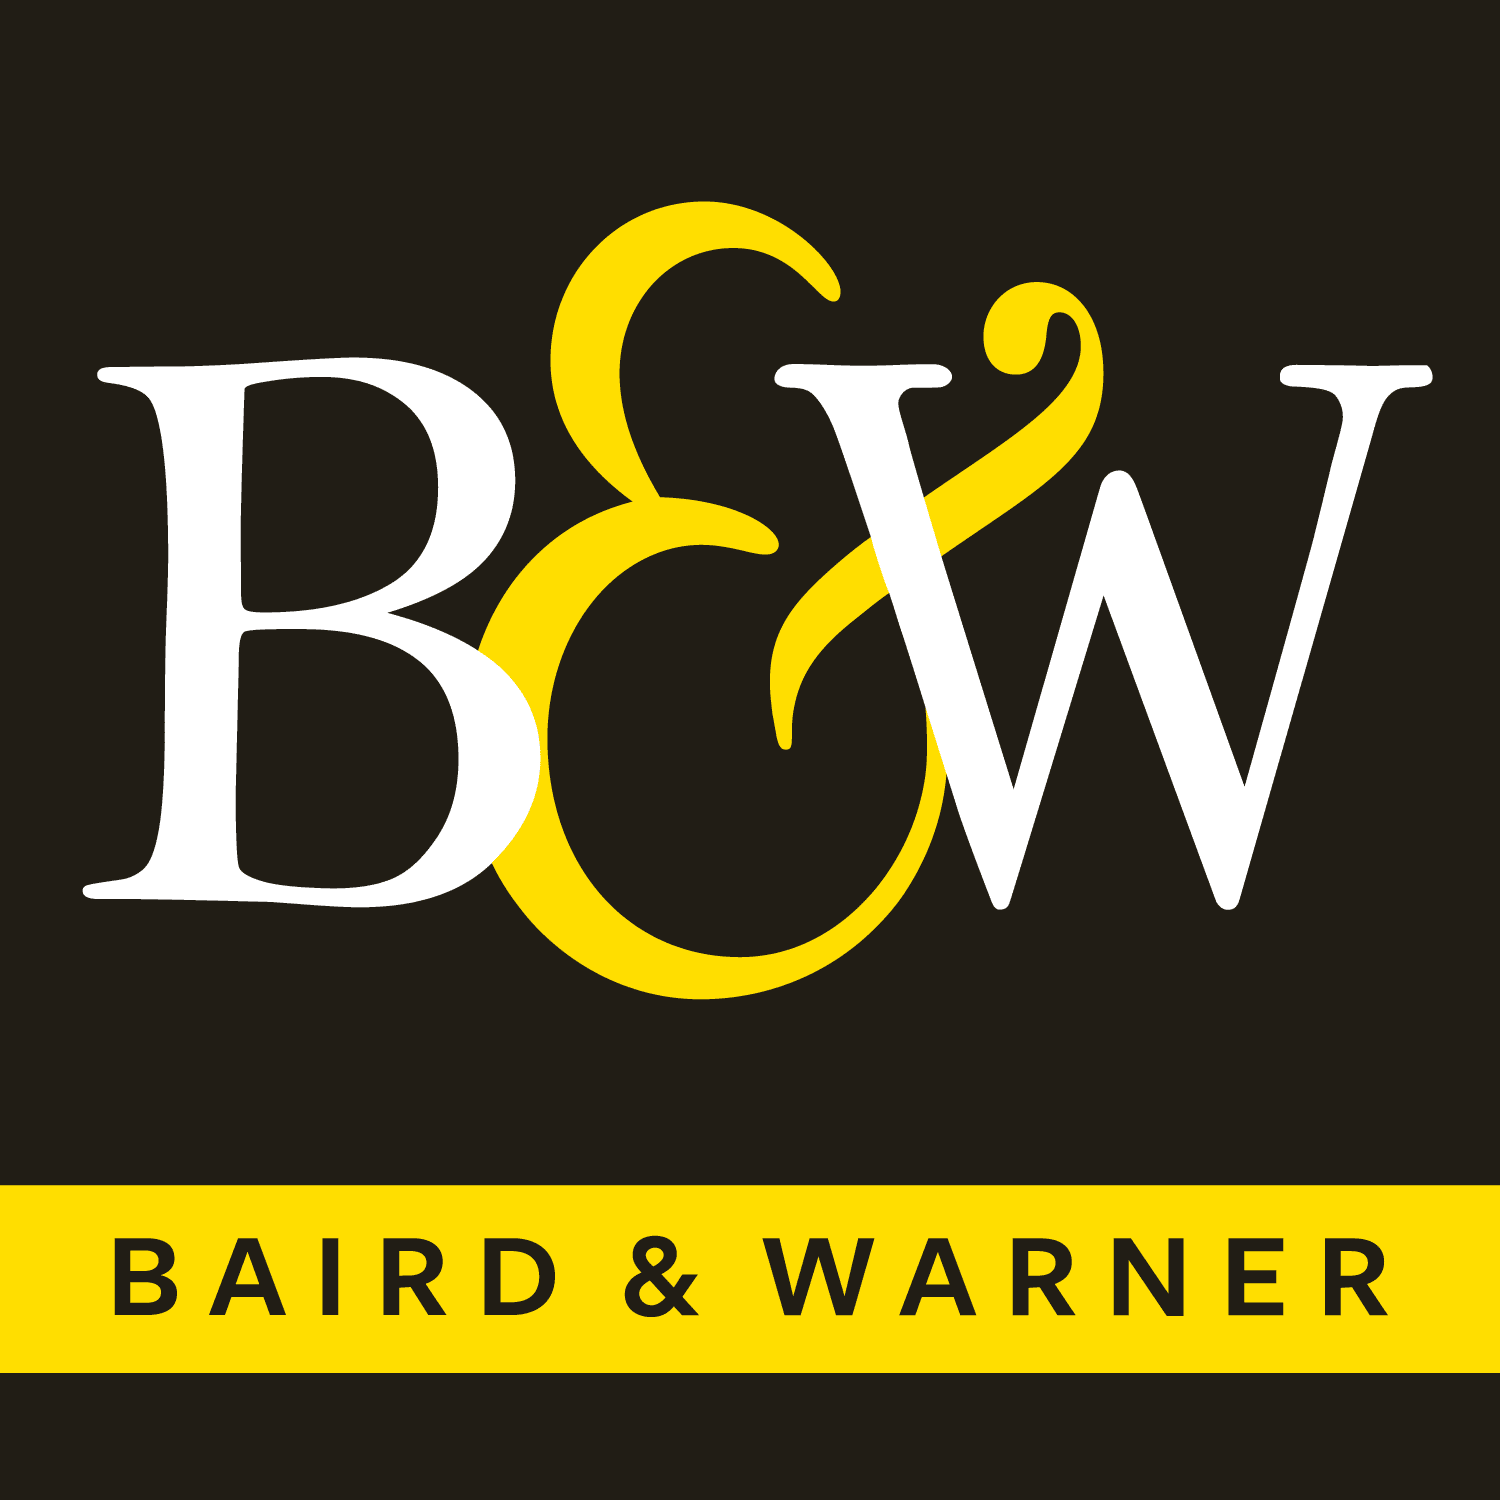 The logo for b & w bard & warner.